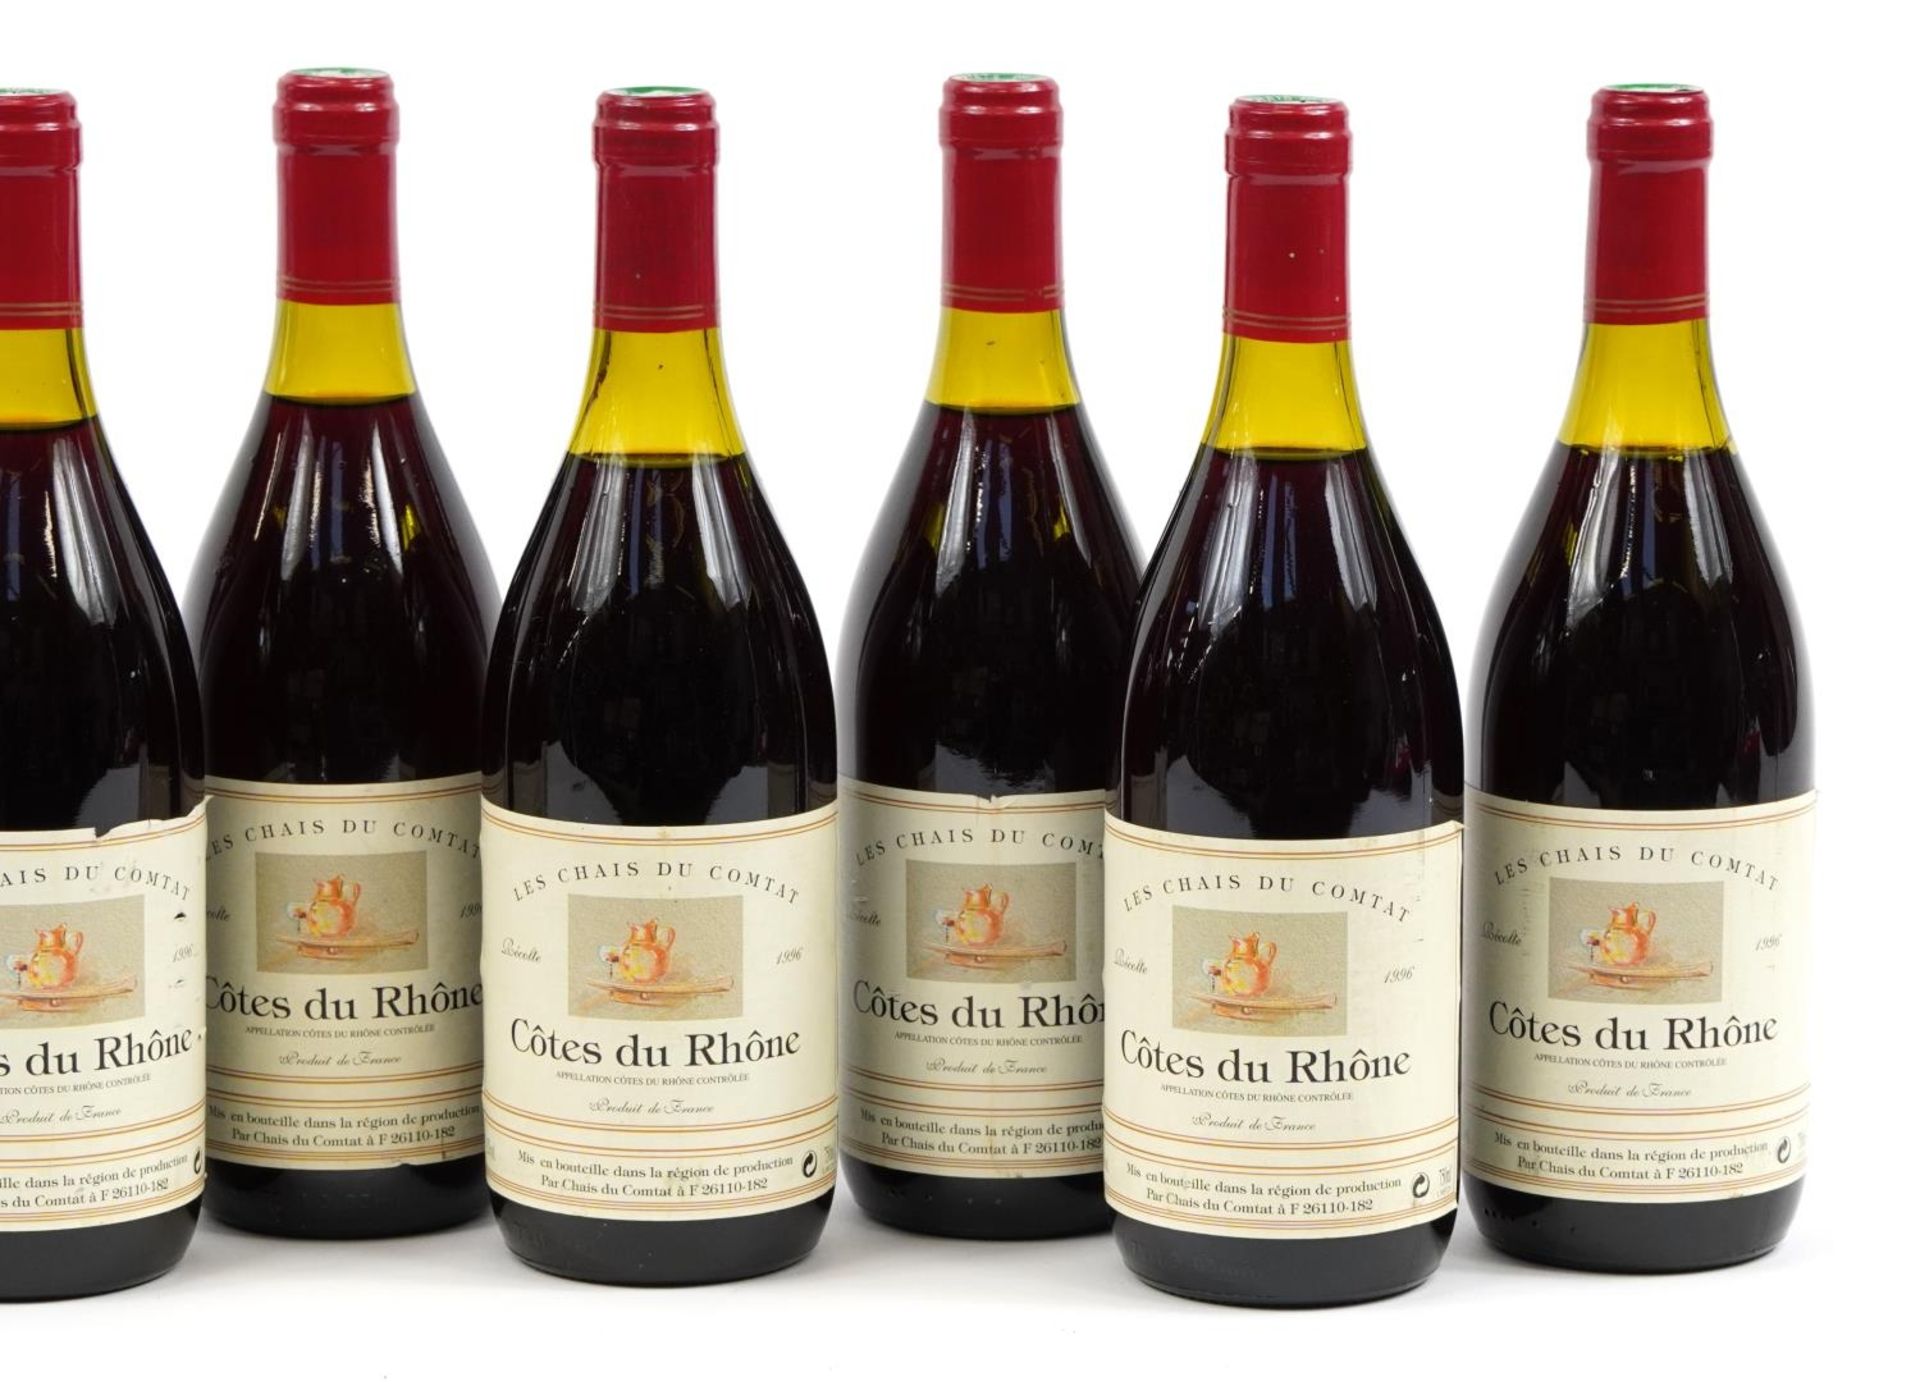 Eight bottles of 1996 Les Chais du Comtat Cote du Rhone red wine - Image 3 of 3